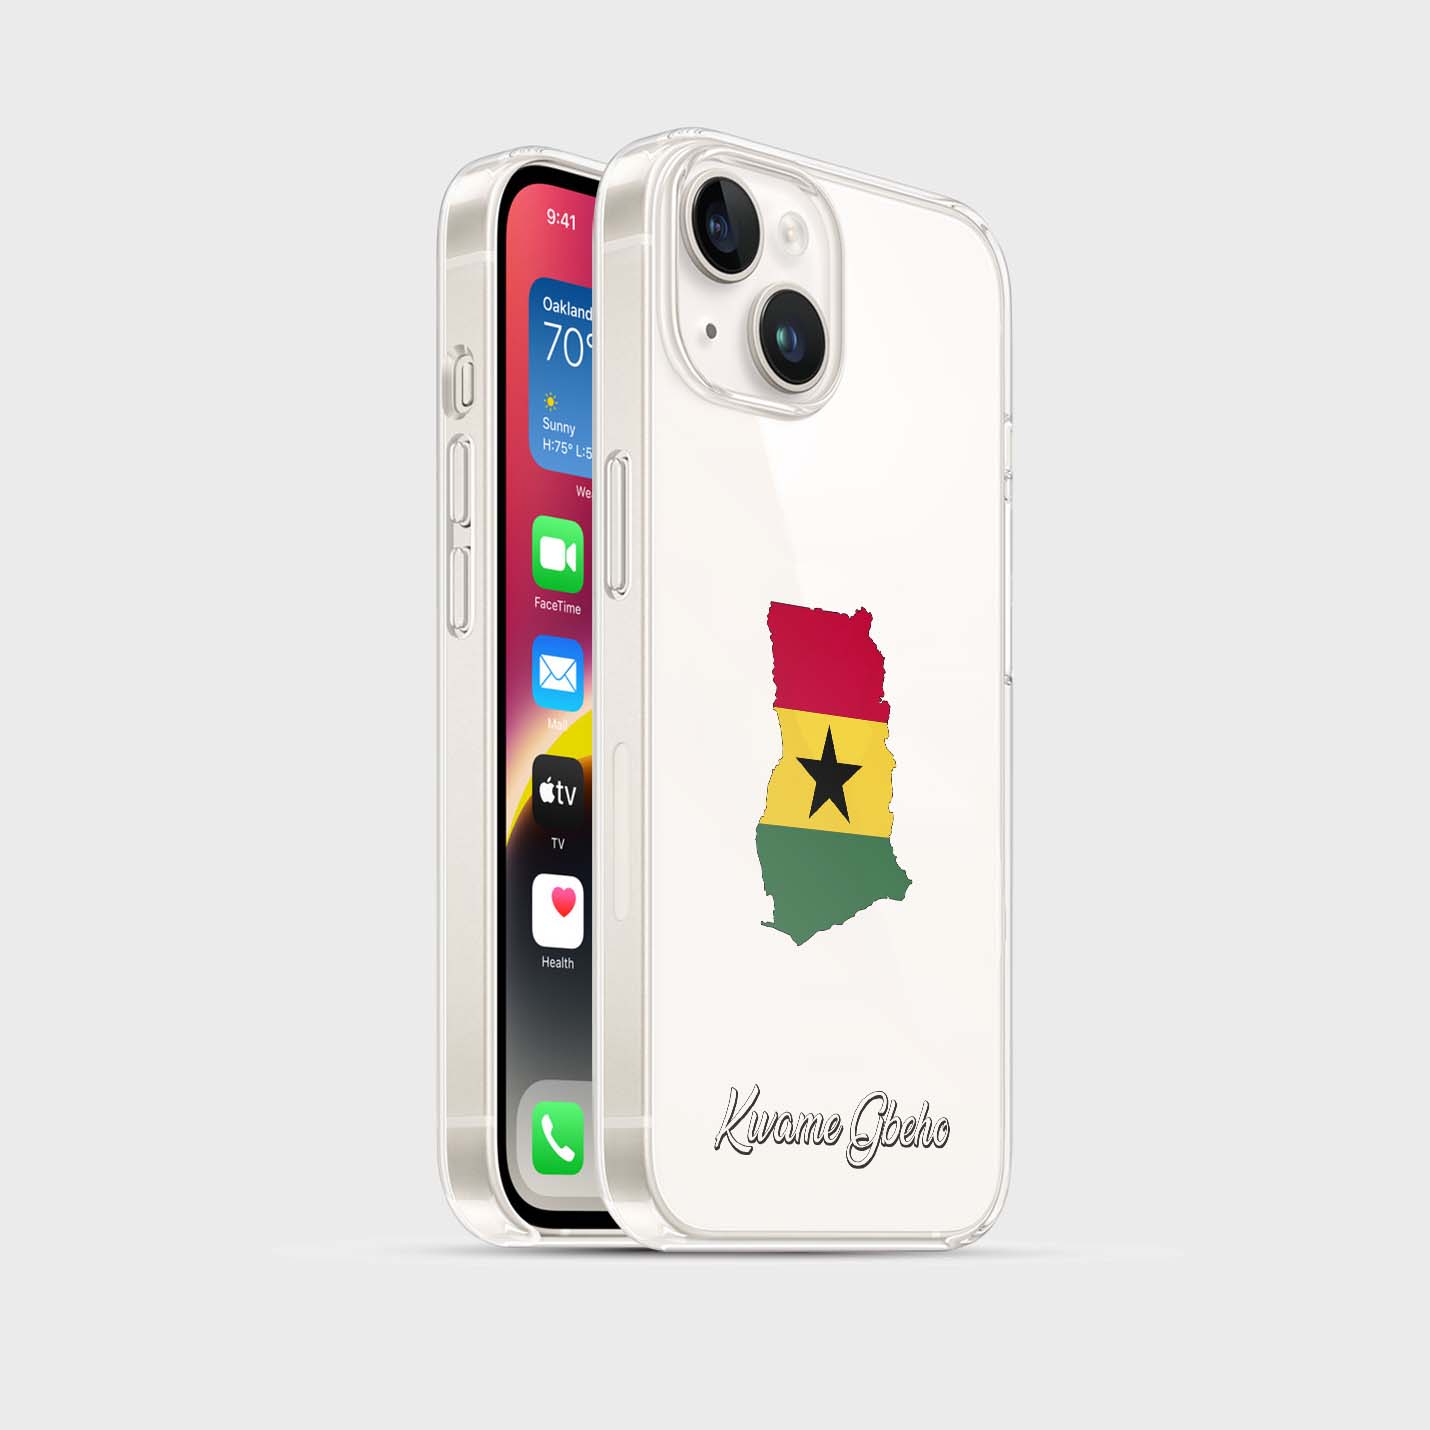 Handyhüllen mit Flagge - Ghana